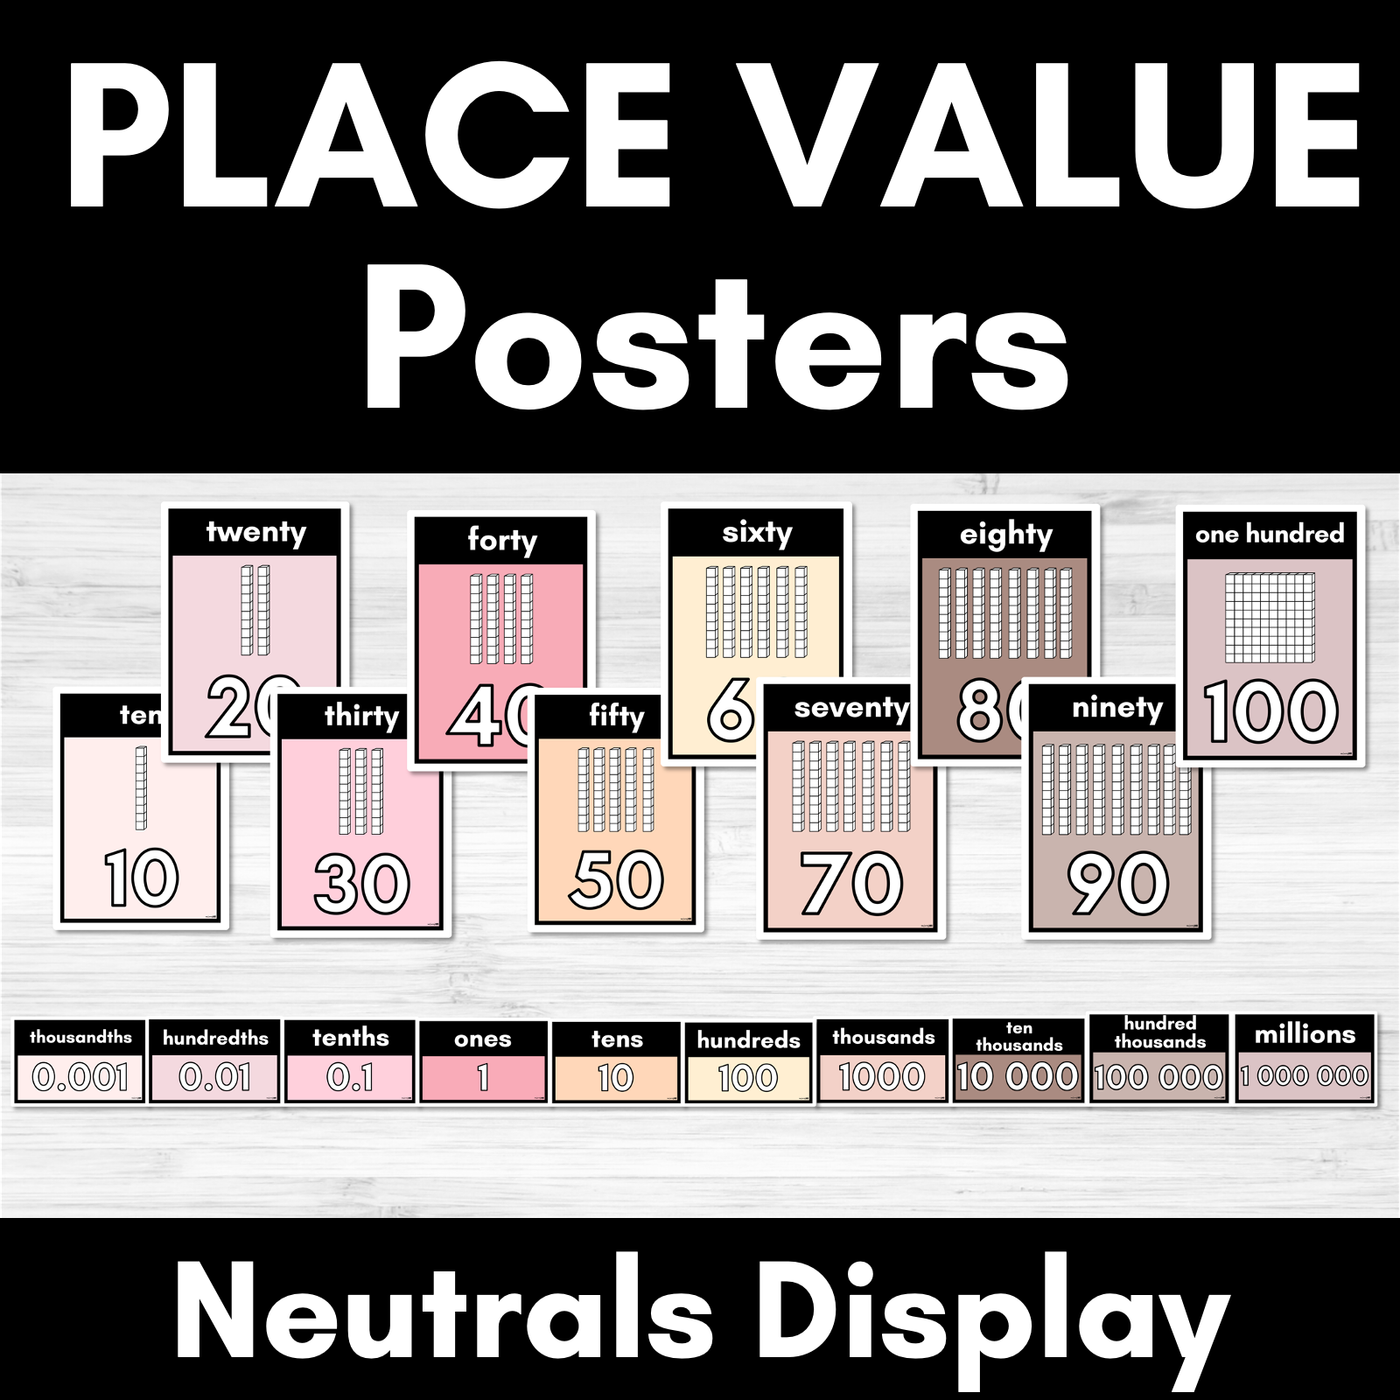 Place Value Posters NEUTRAL COLOURS